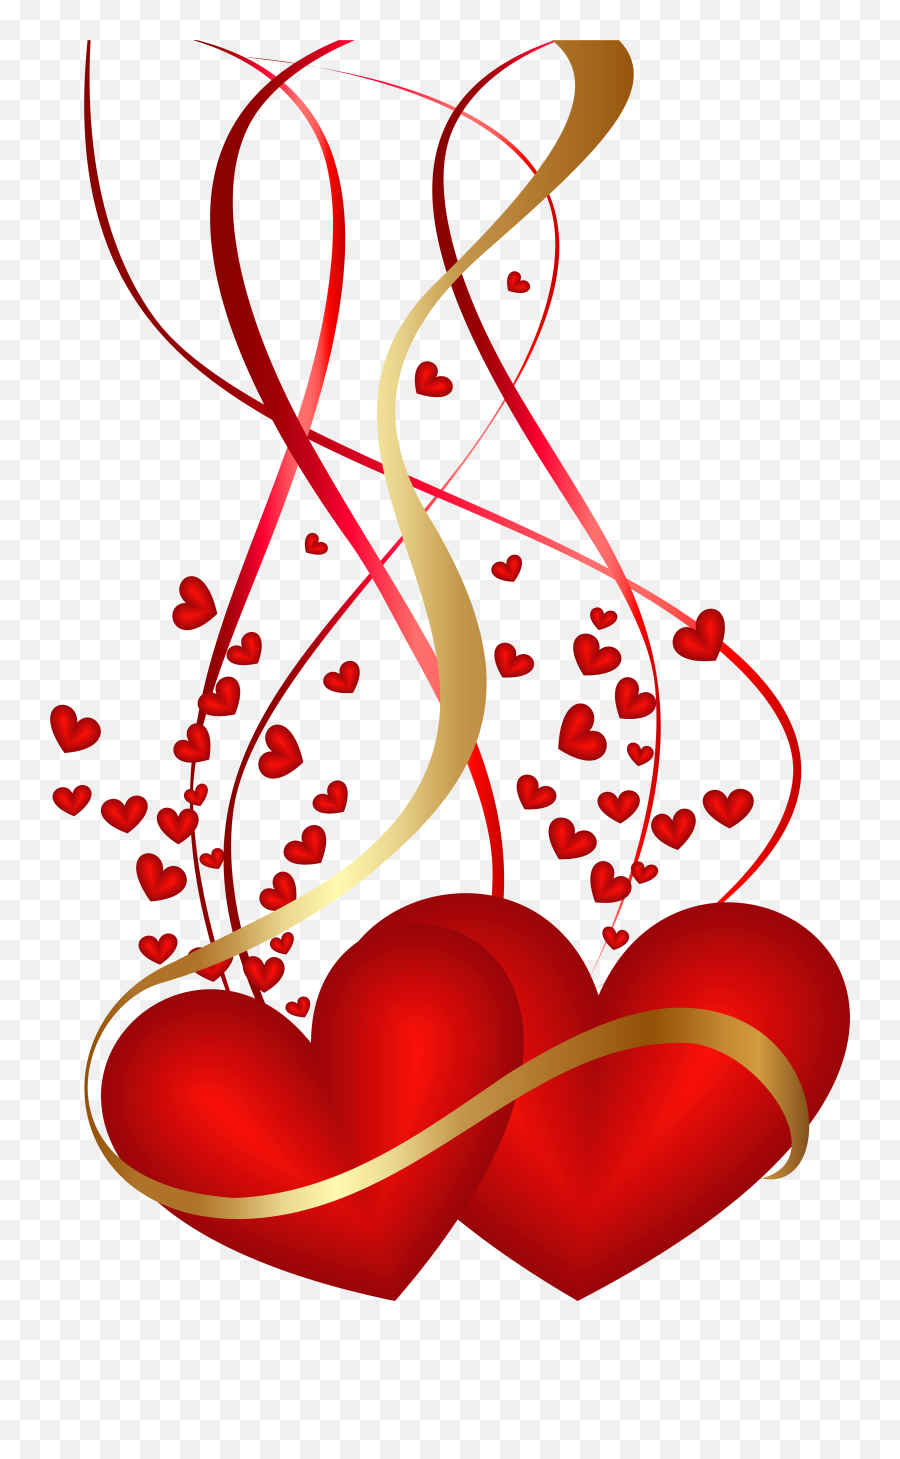 Valentine Day 2021 Wallpapers - Wallpaper Cave Emoji,Your Emojis Vantines Day 3 9 19